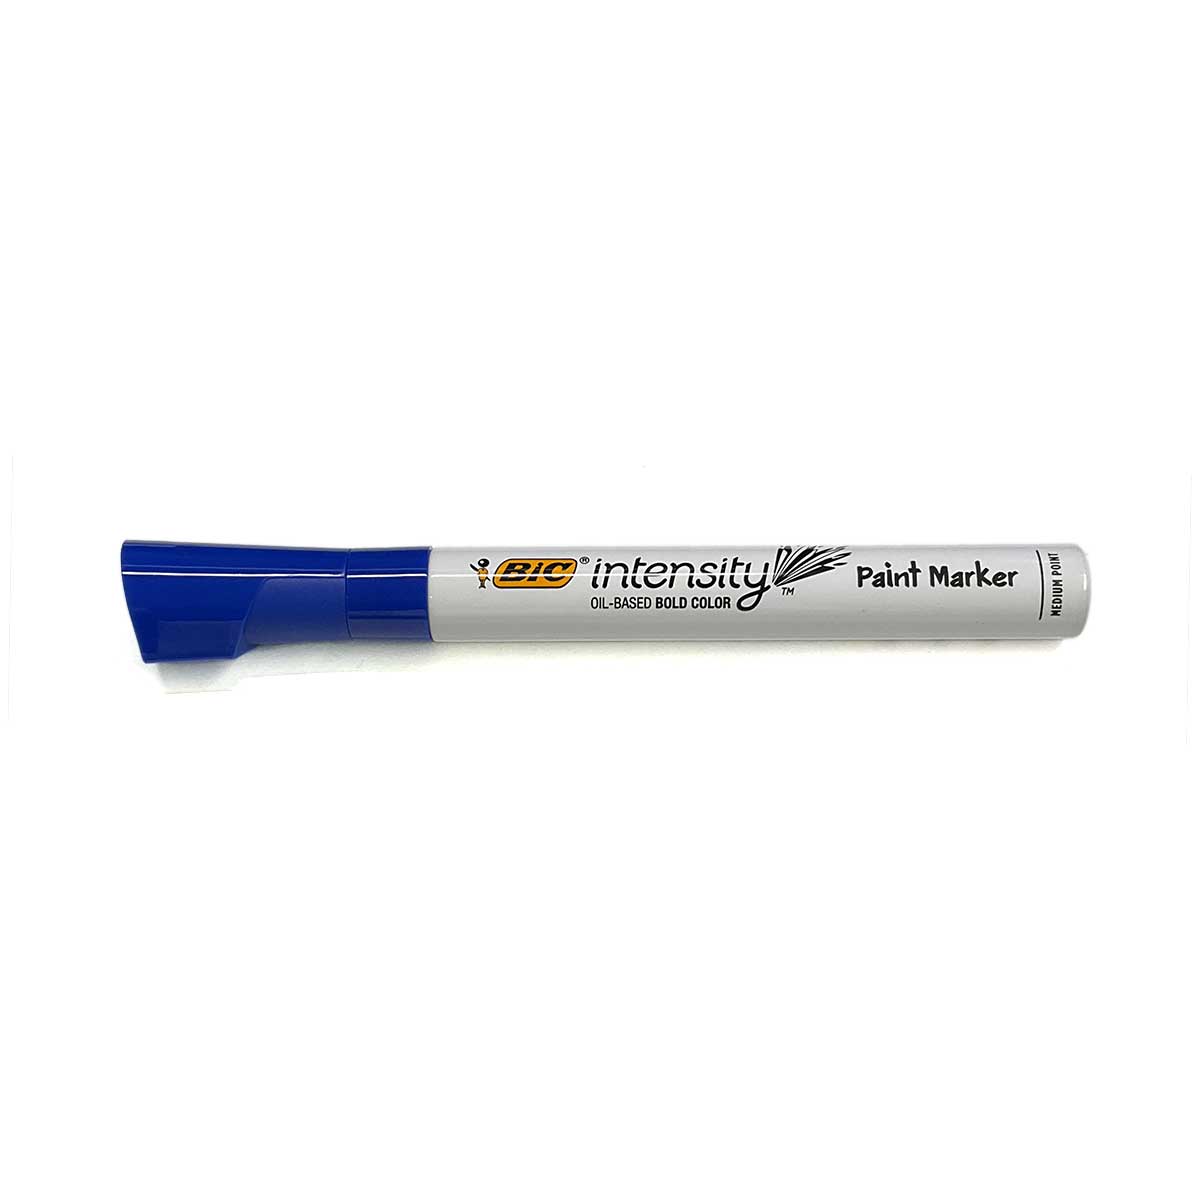 Blue Paint Marker, Bic Intensity, Oil Based